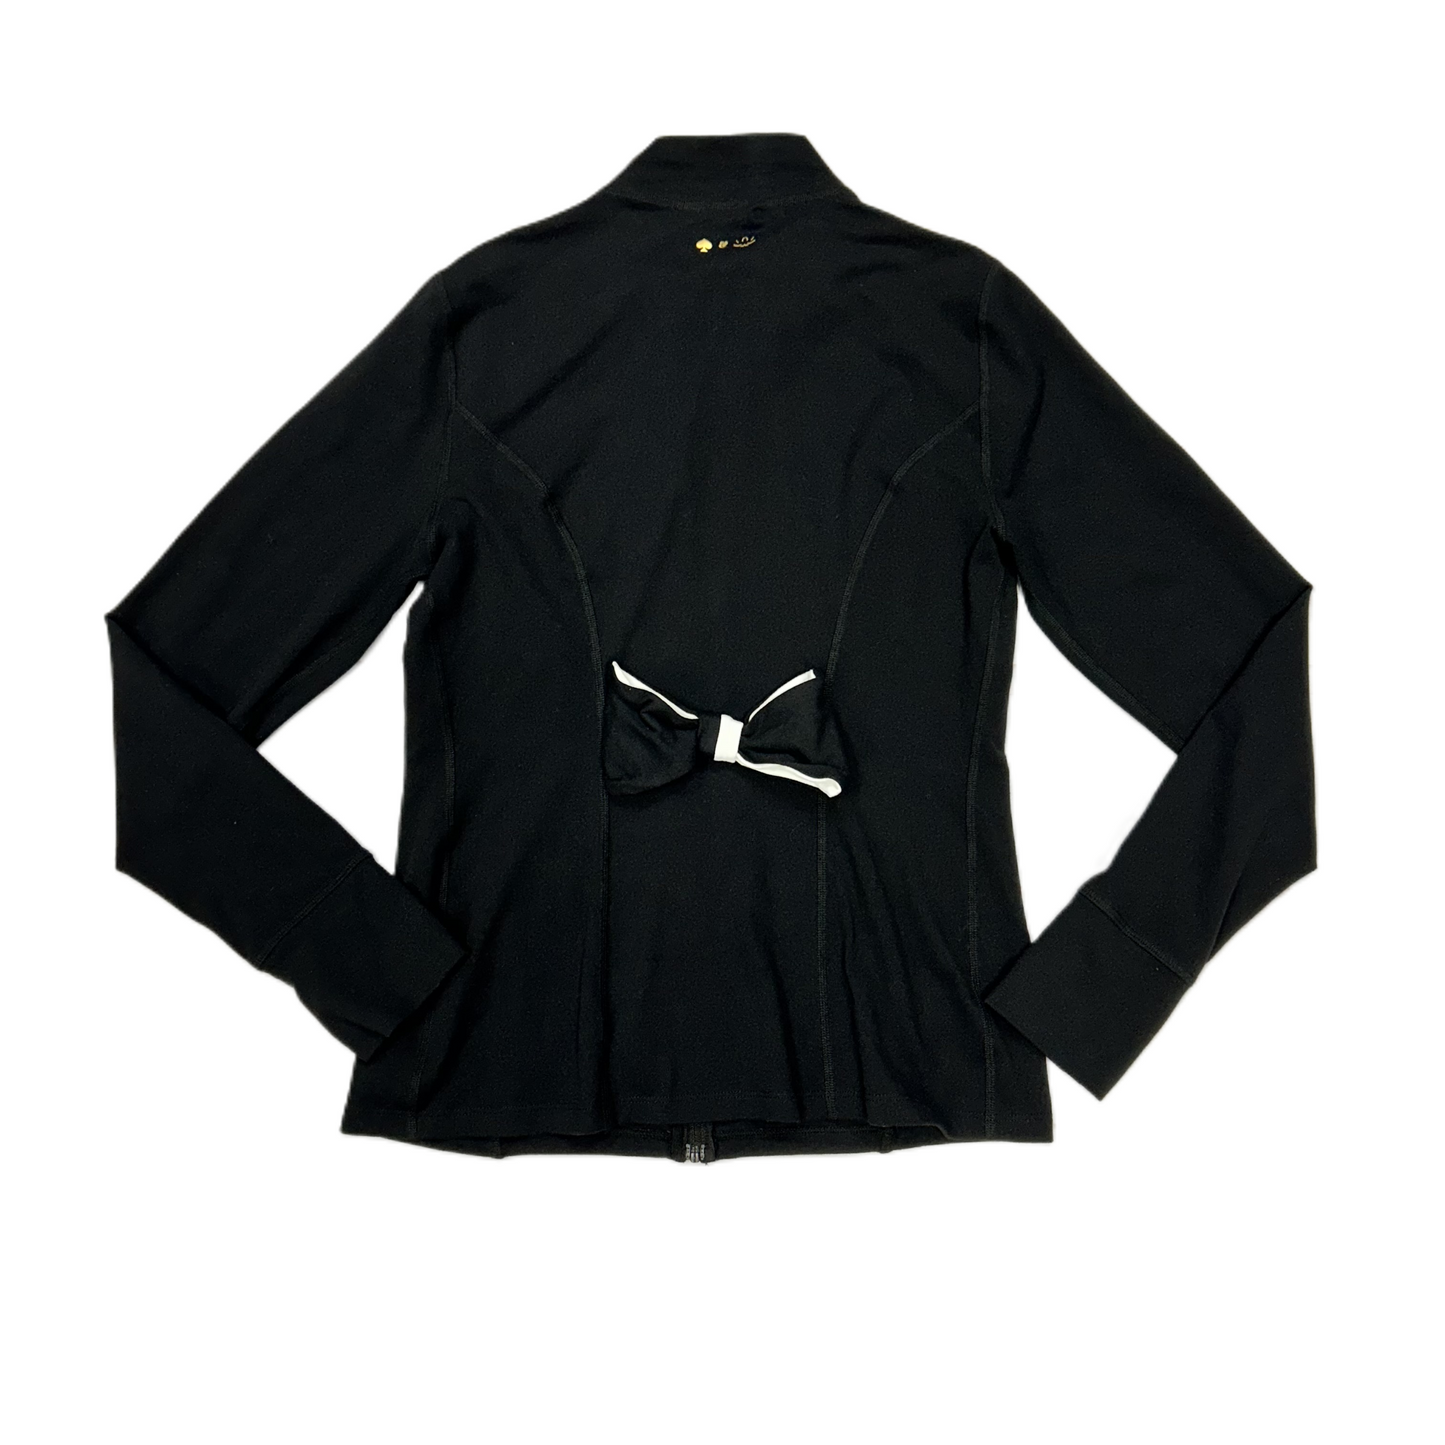 Athletic Jacket By Beyond Yoga x Kate Spade  Size: M